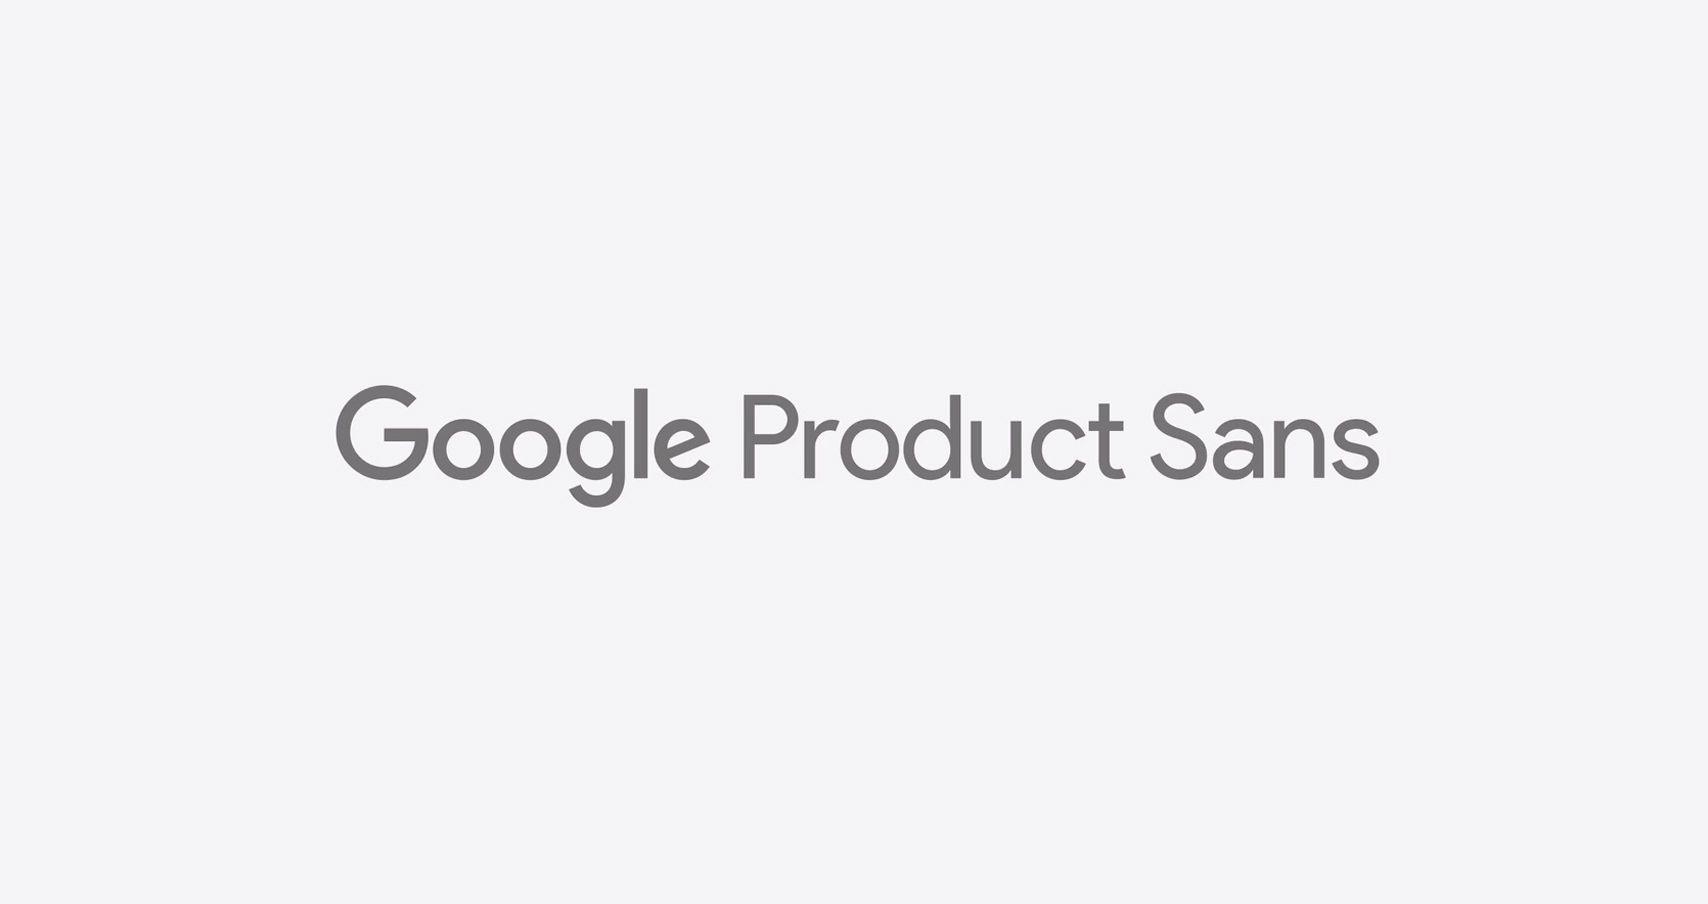 Google Product Logo - Evolving the Google Identity